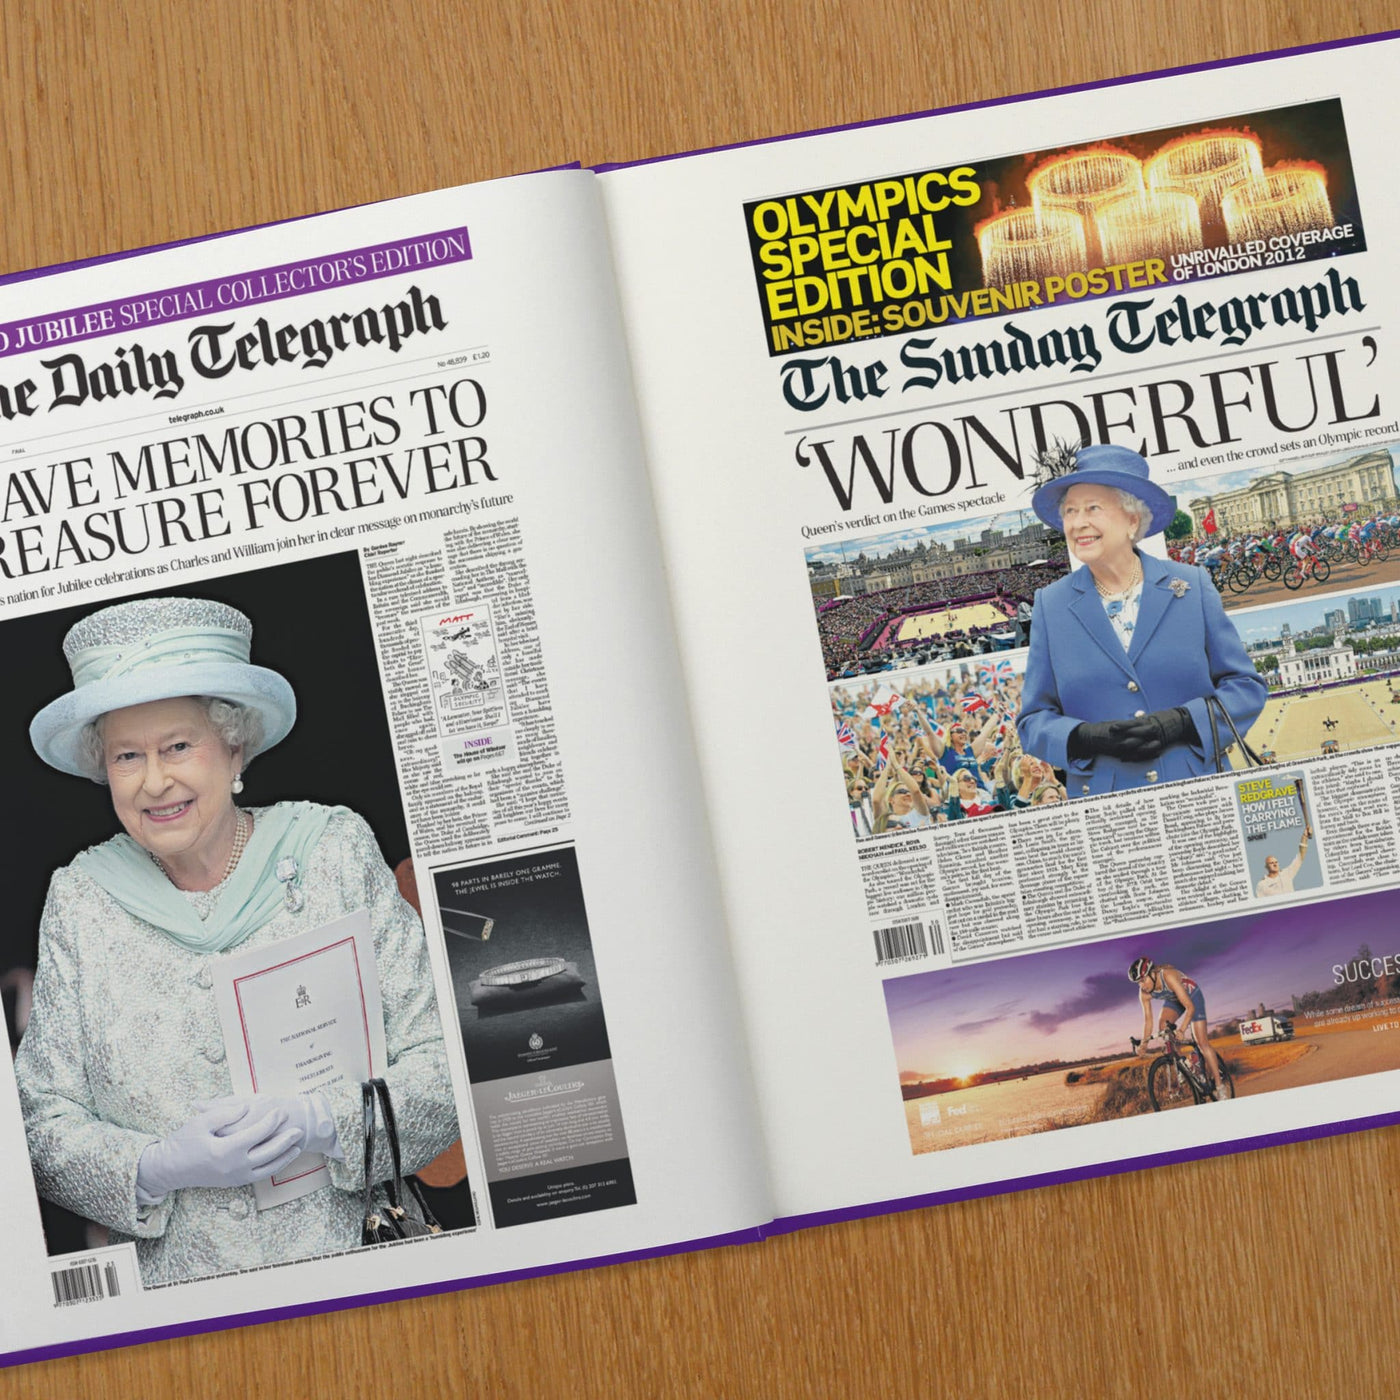 Telegraph Queen Elizabeth Jubilee Newspaper Book – Purple Leatherette